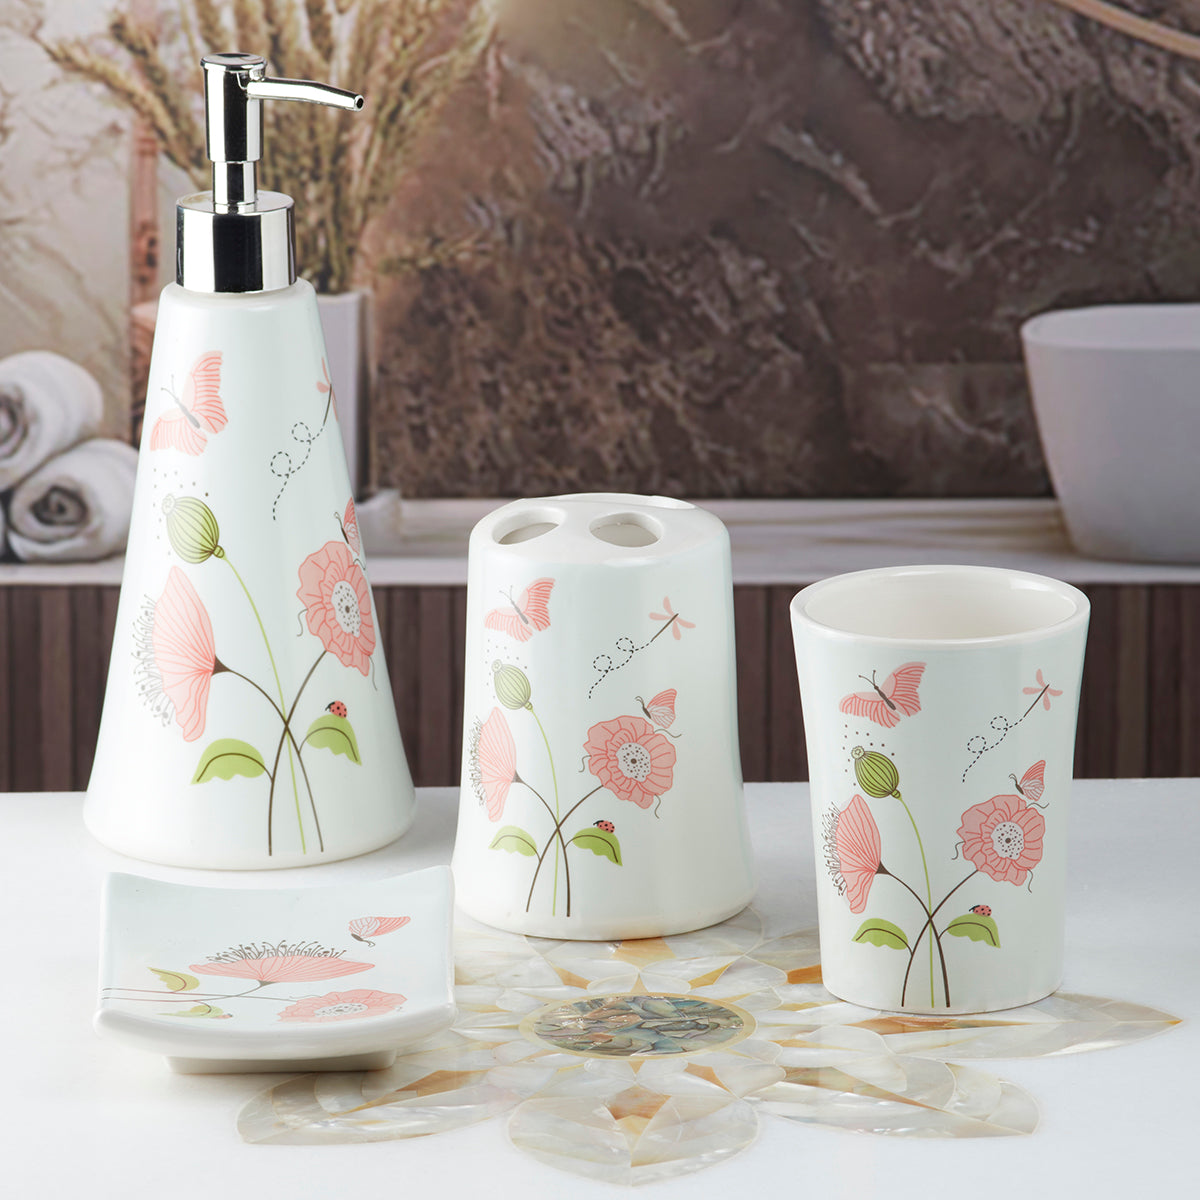 Ceramic Bathroom Accessories Set of 4 Bath Set with Soap Dispenser (8168)